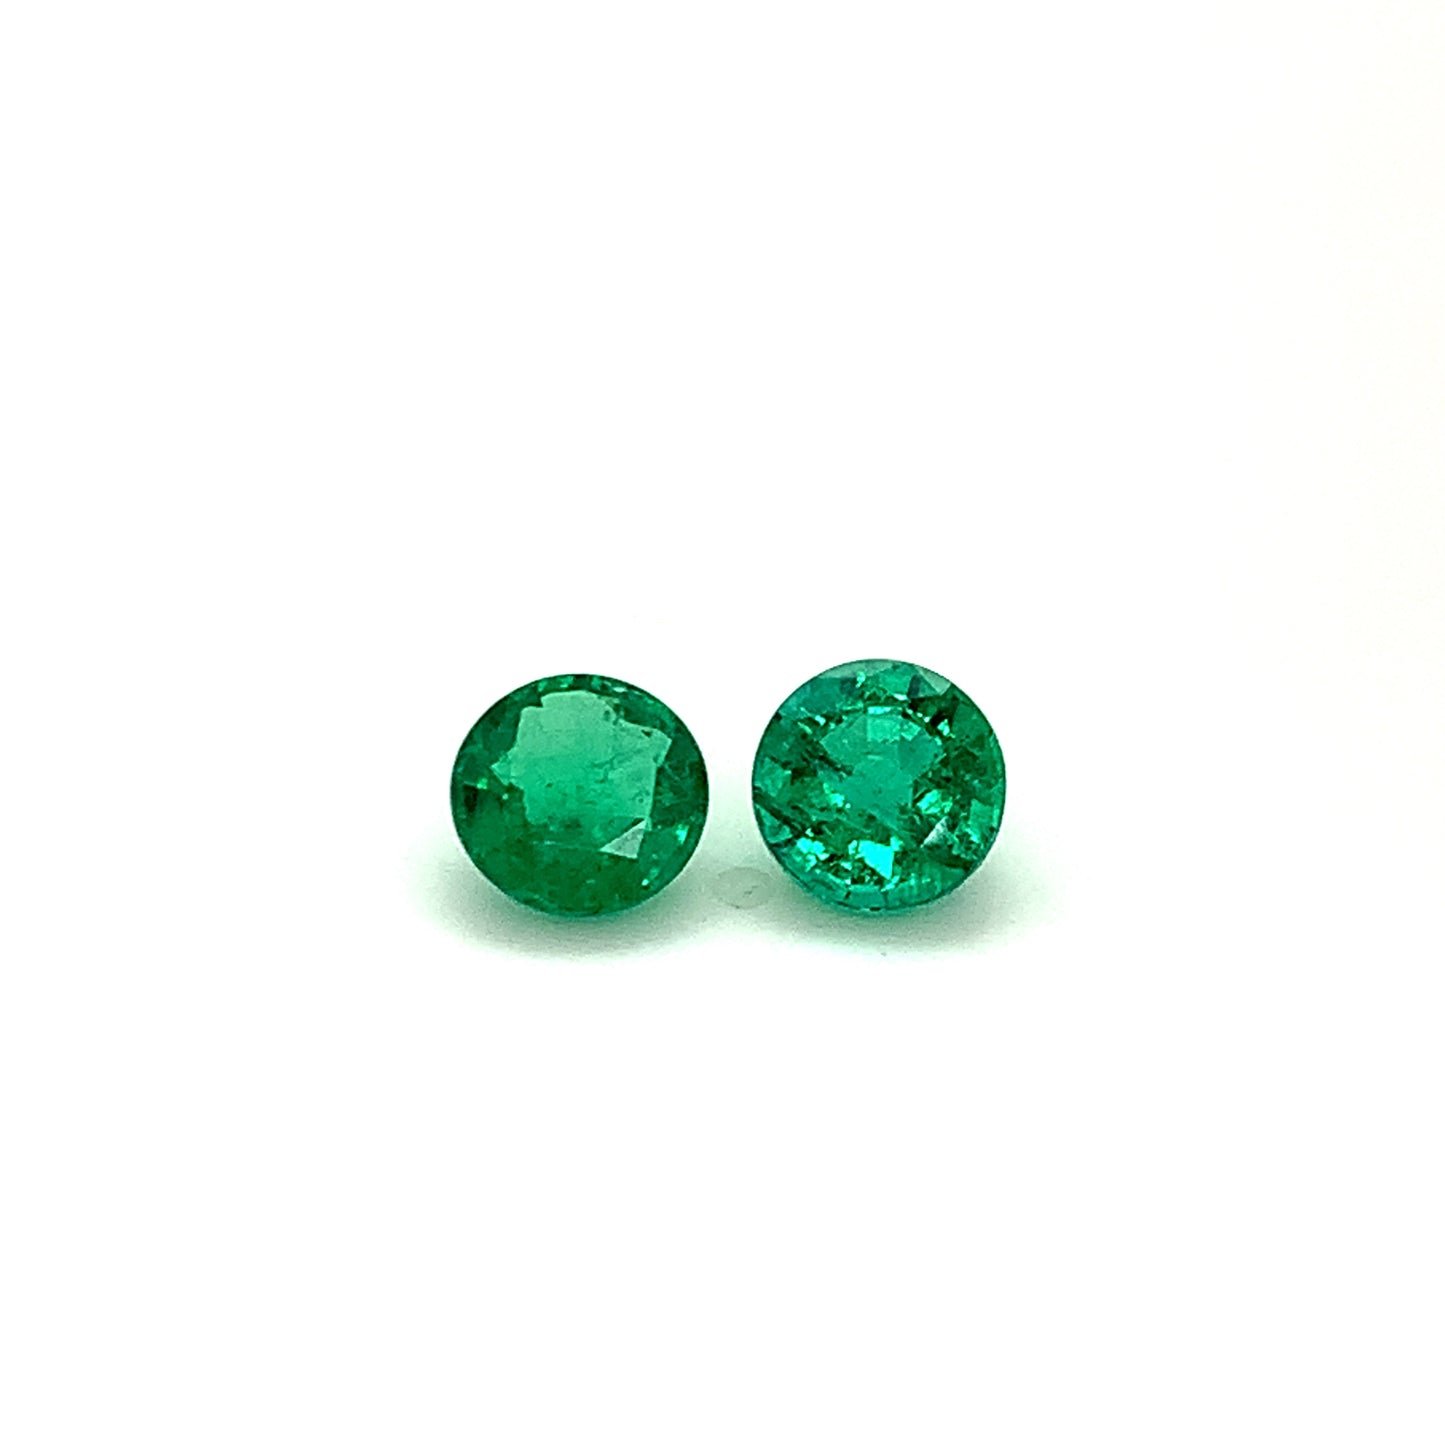 9mm Green Emerald CH18 Bedazzler or Gemagic Rhinestones Size 40 - 50 Pcs